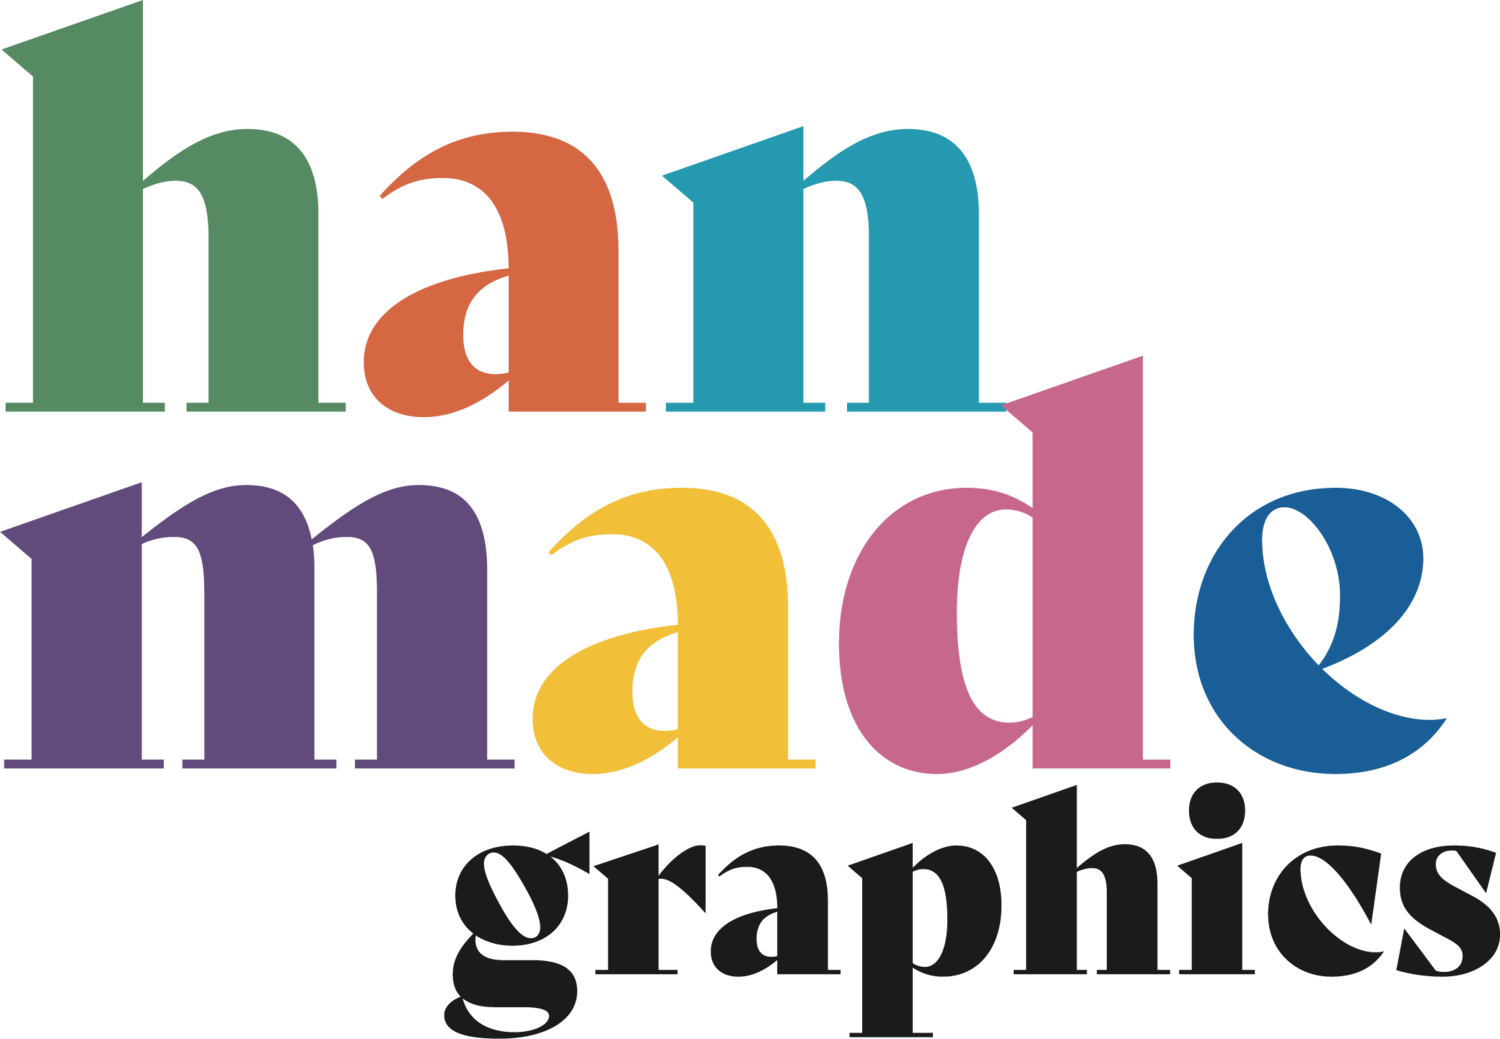 hanmade graphics